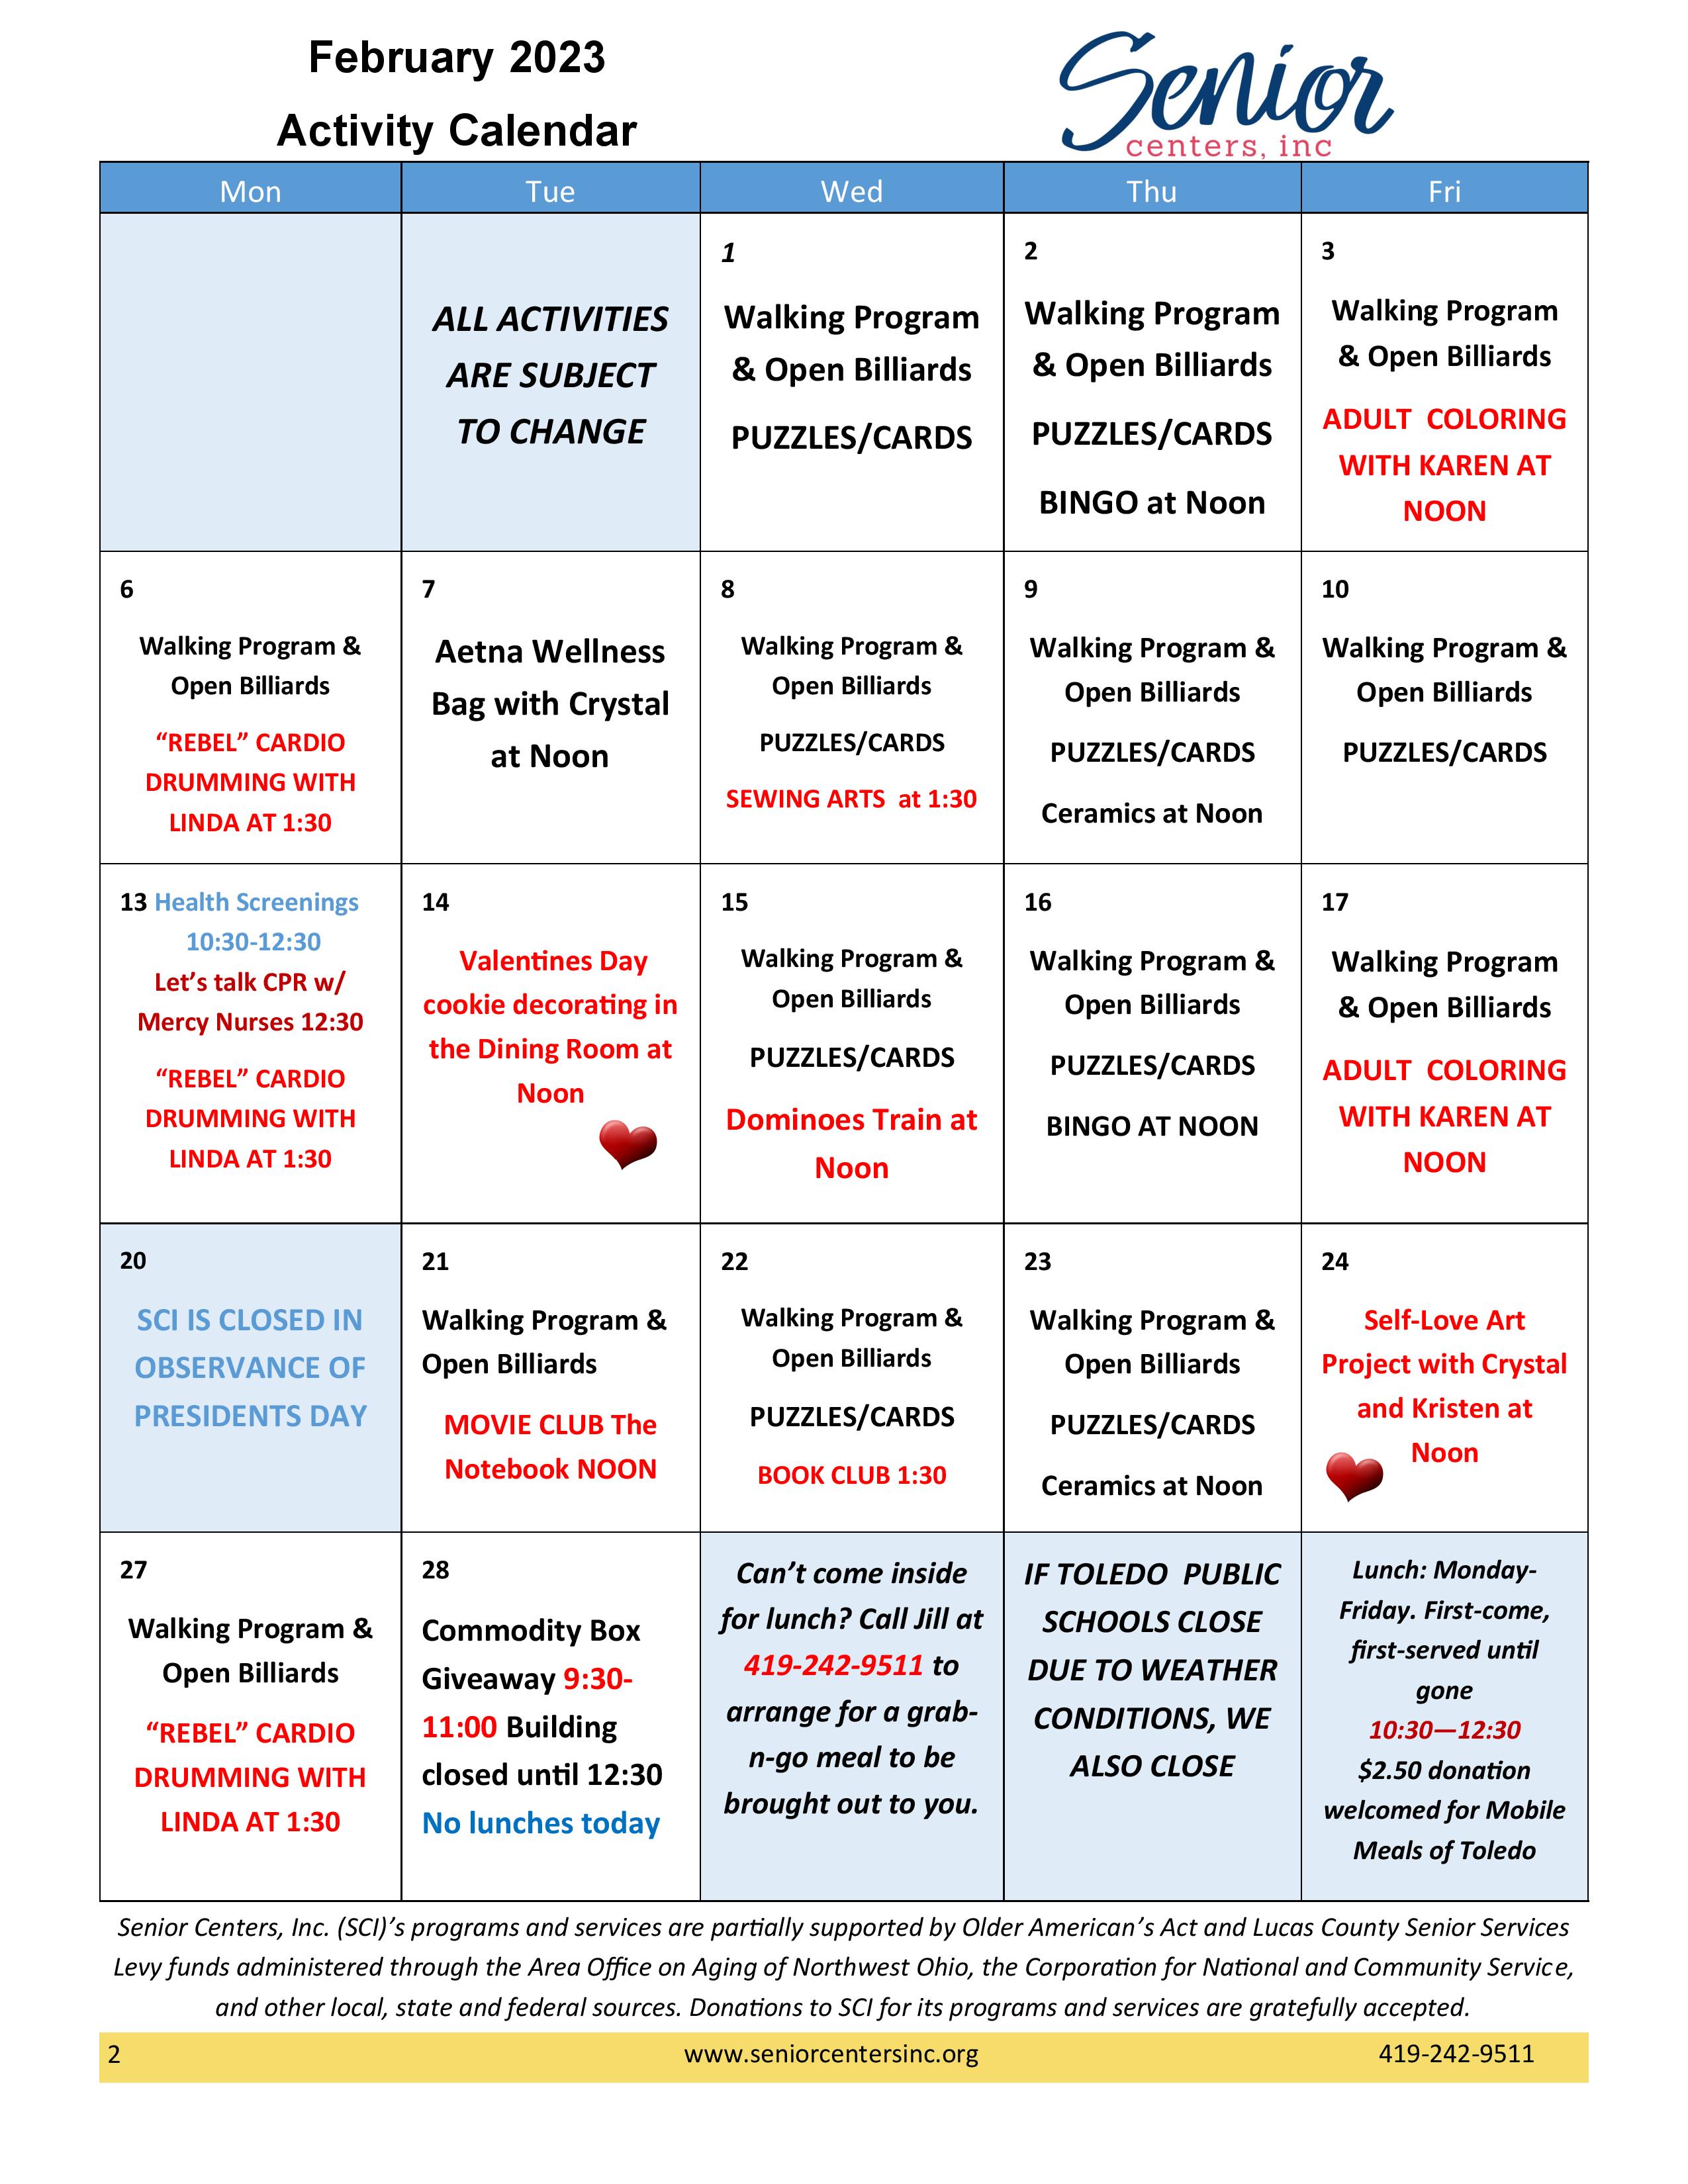 February 2023 Newsletter and Activity Calendar – Senior Centers, Inc.